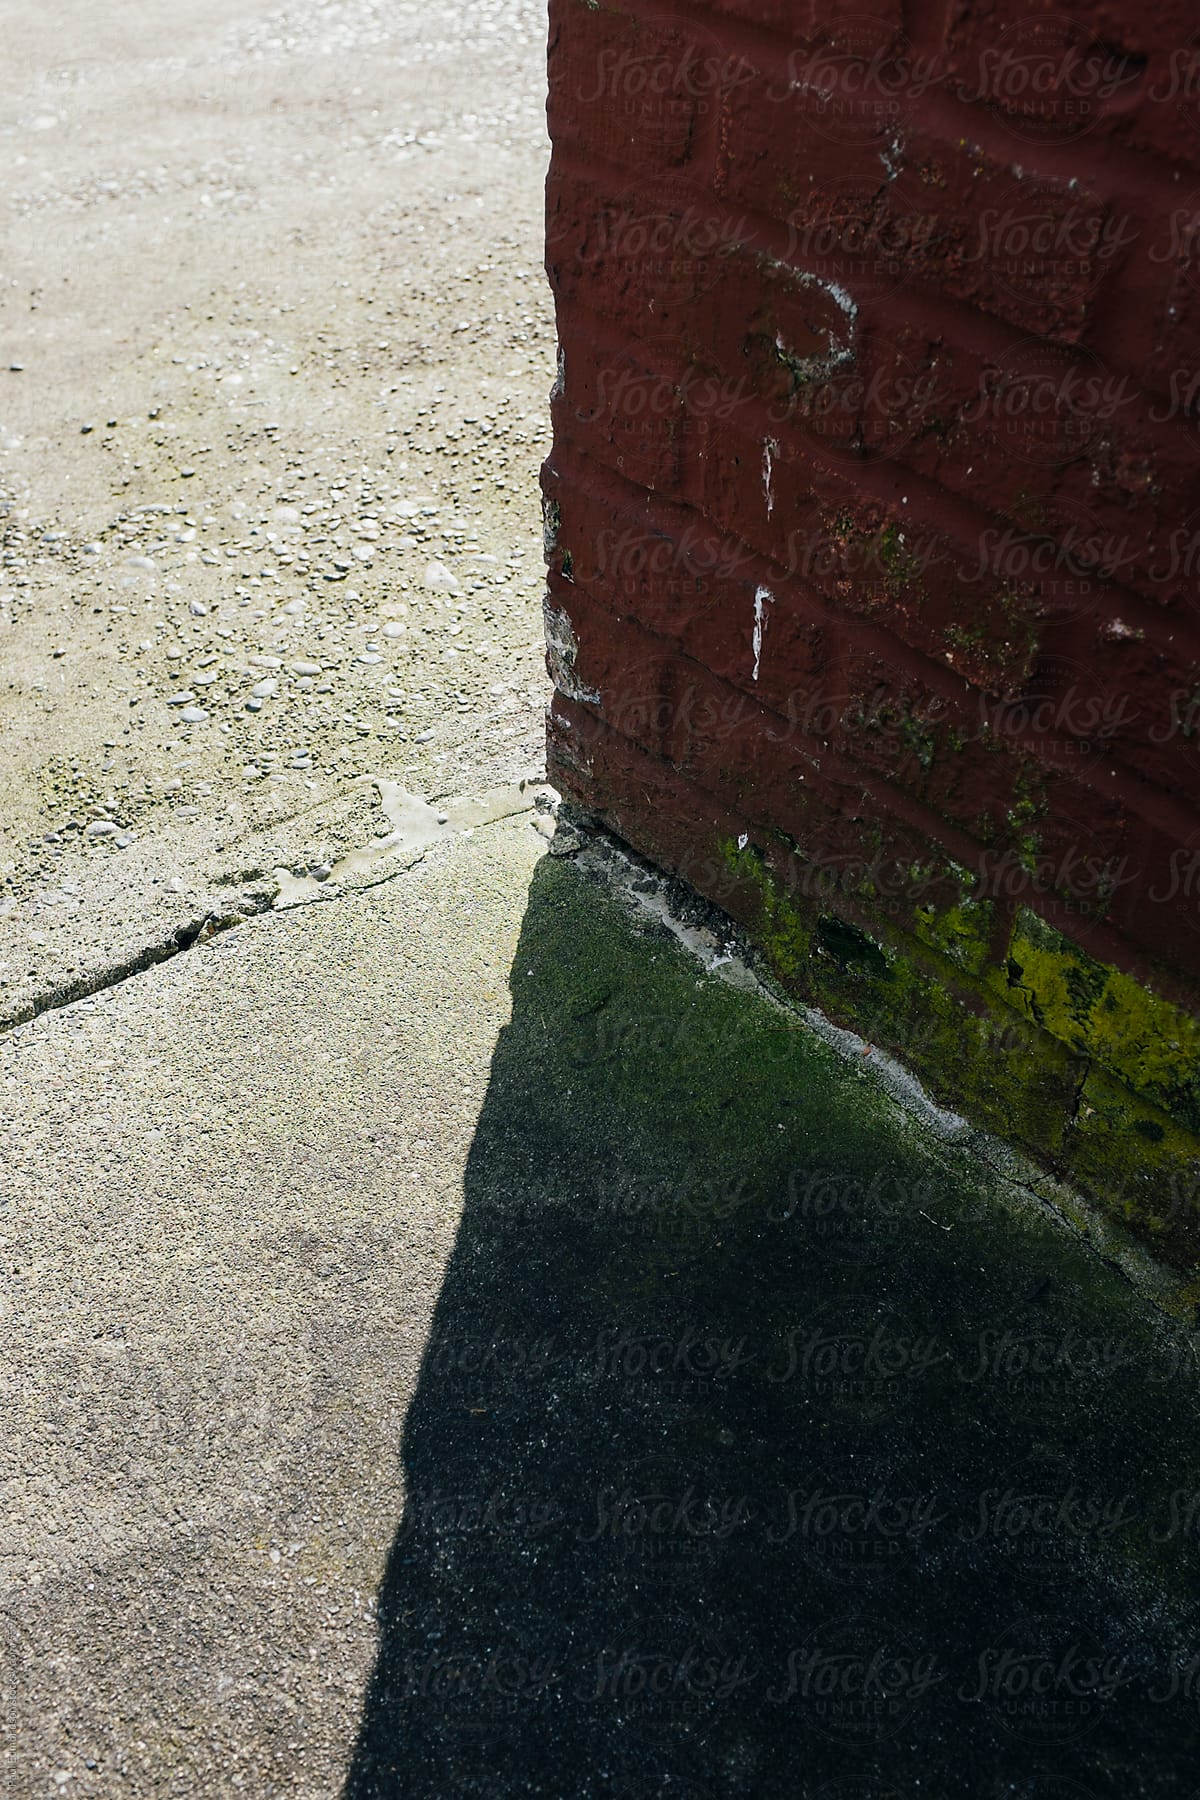 Detail of building corner casting shadow on urban sidewalk